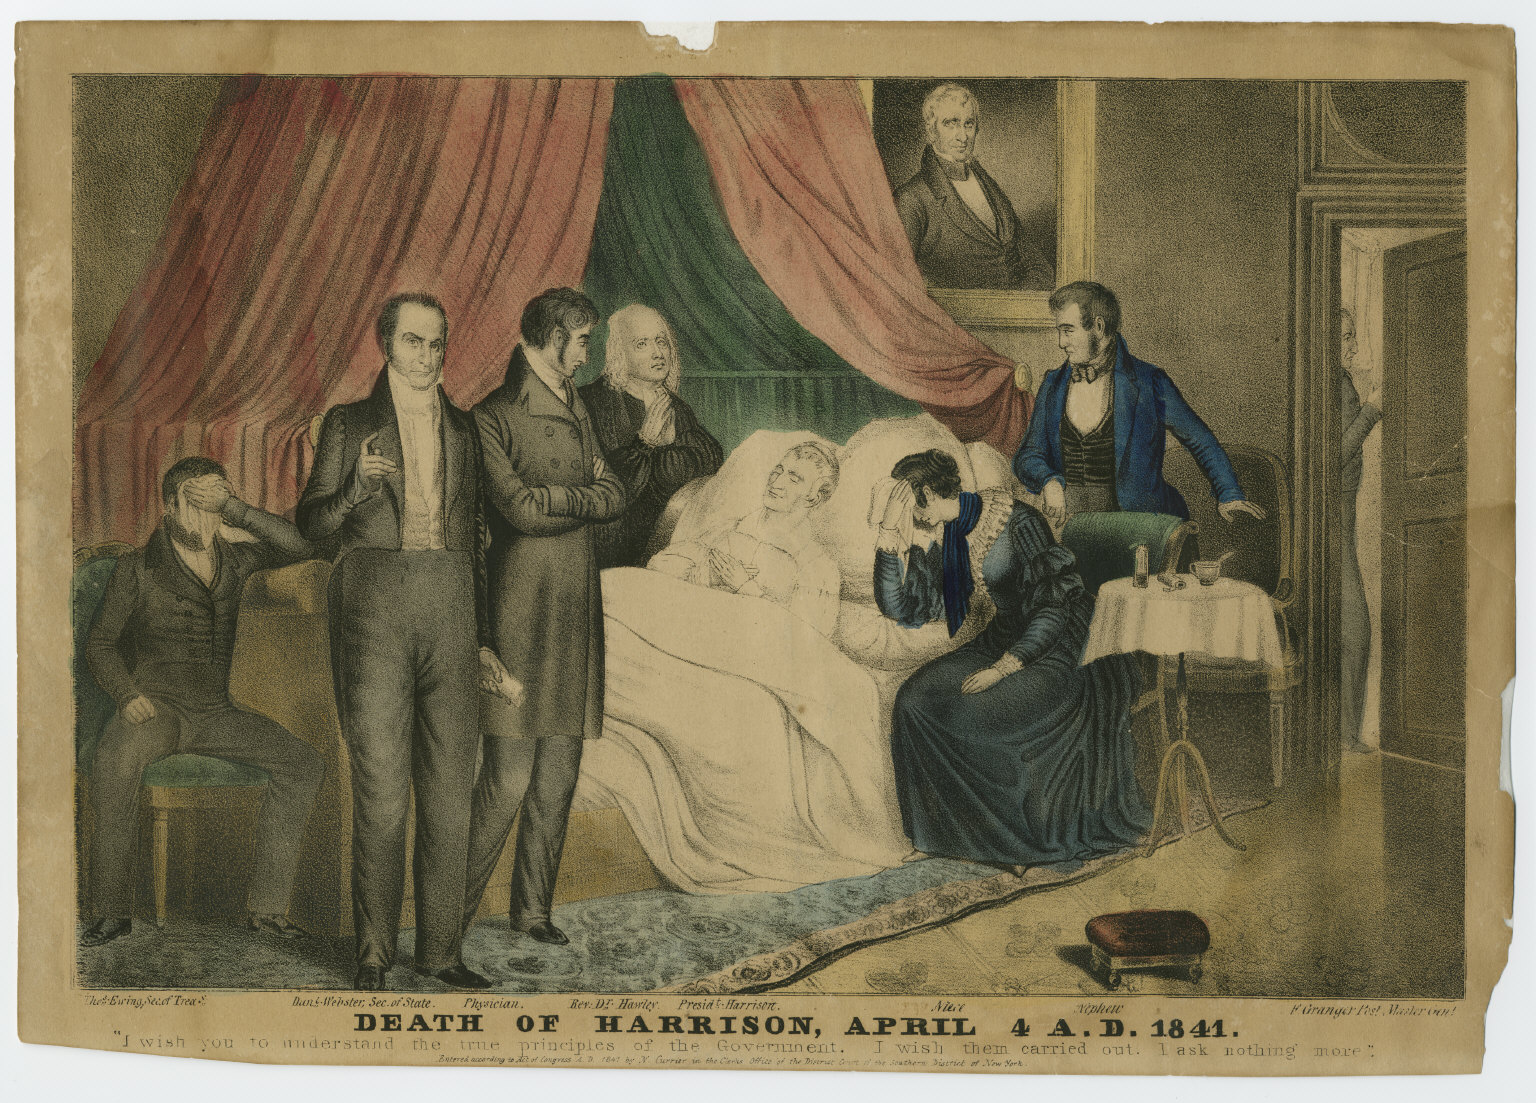 Death of Harrison 1841. De Cornell University Library